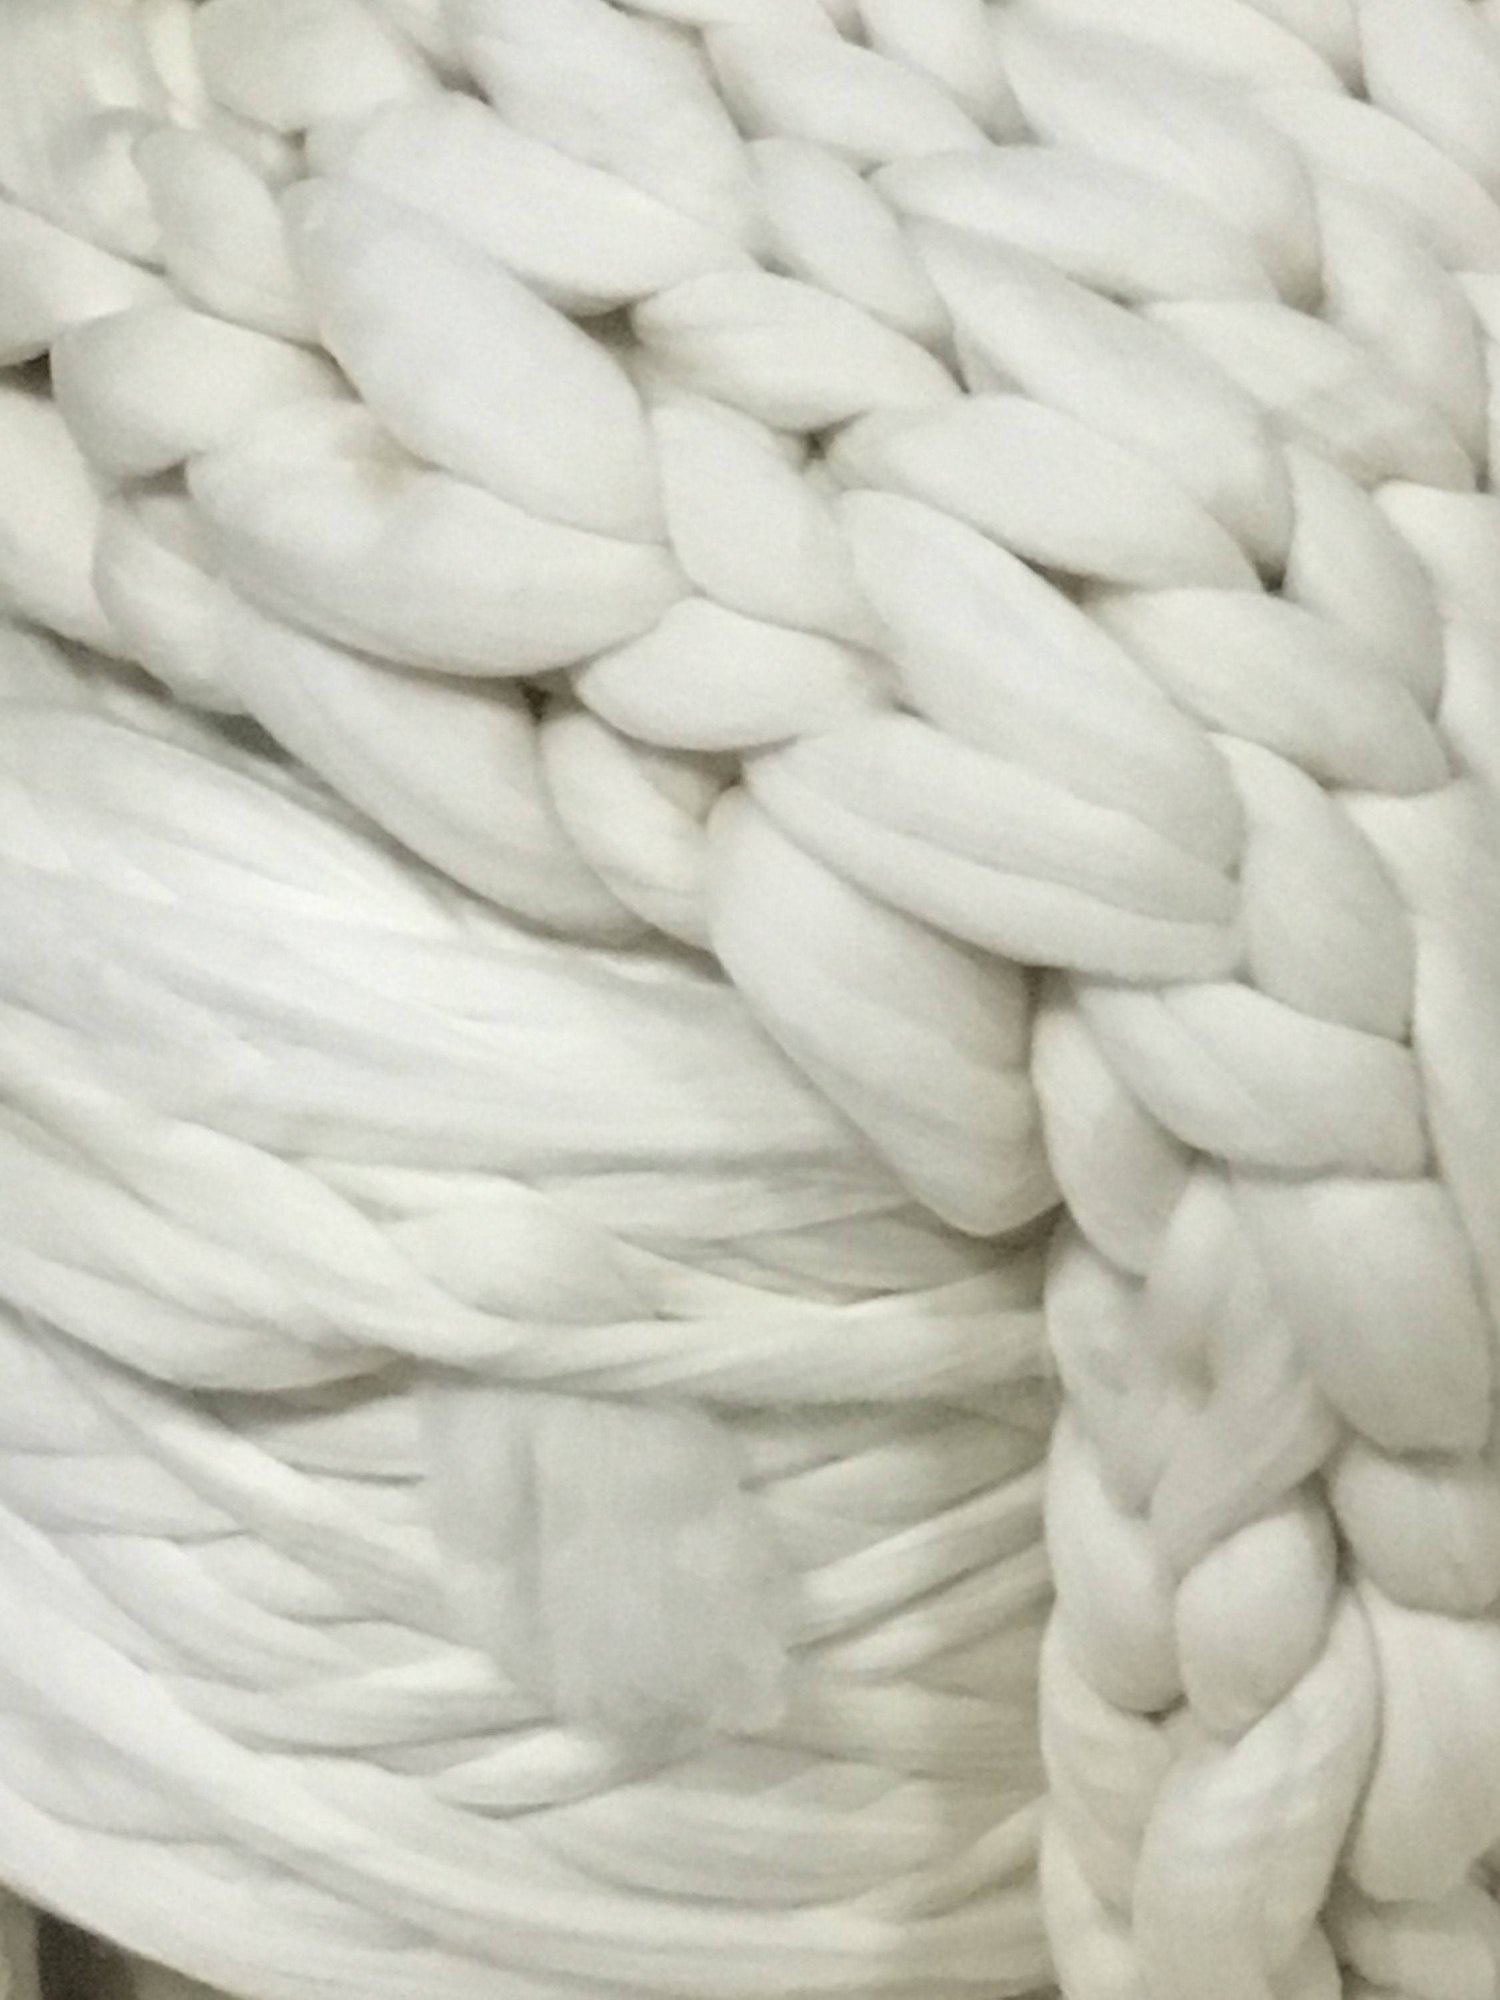 8 lbs Pounds White Wool Roving Chunky Yarn, Jumbo Yarn, Big Yarn, Giant  Yarn to Make Your Own Chunky Knit Blanket